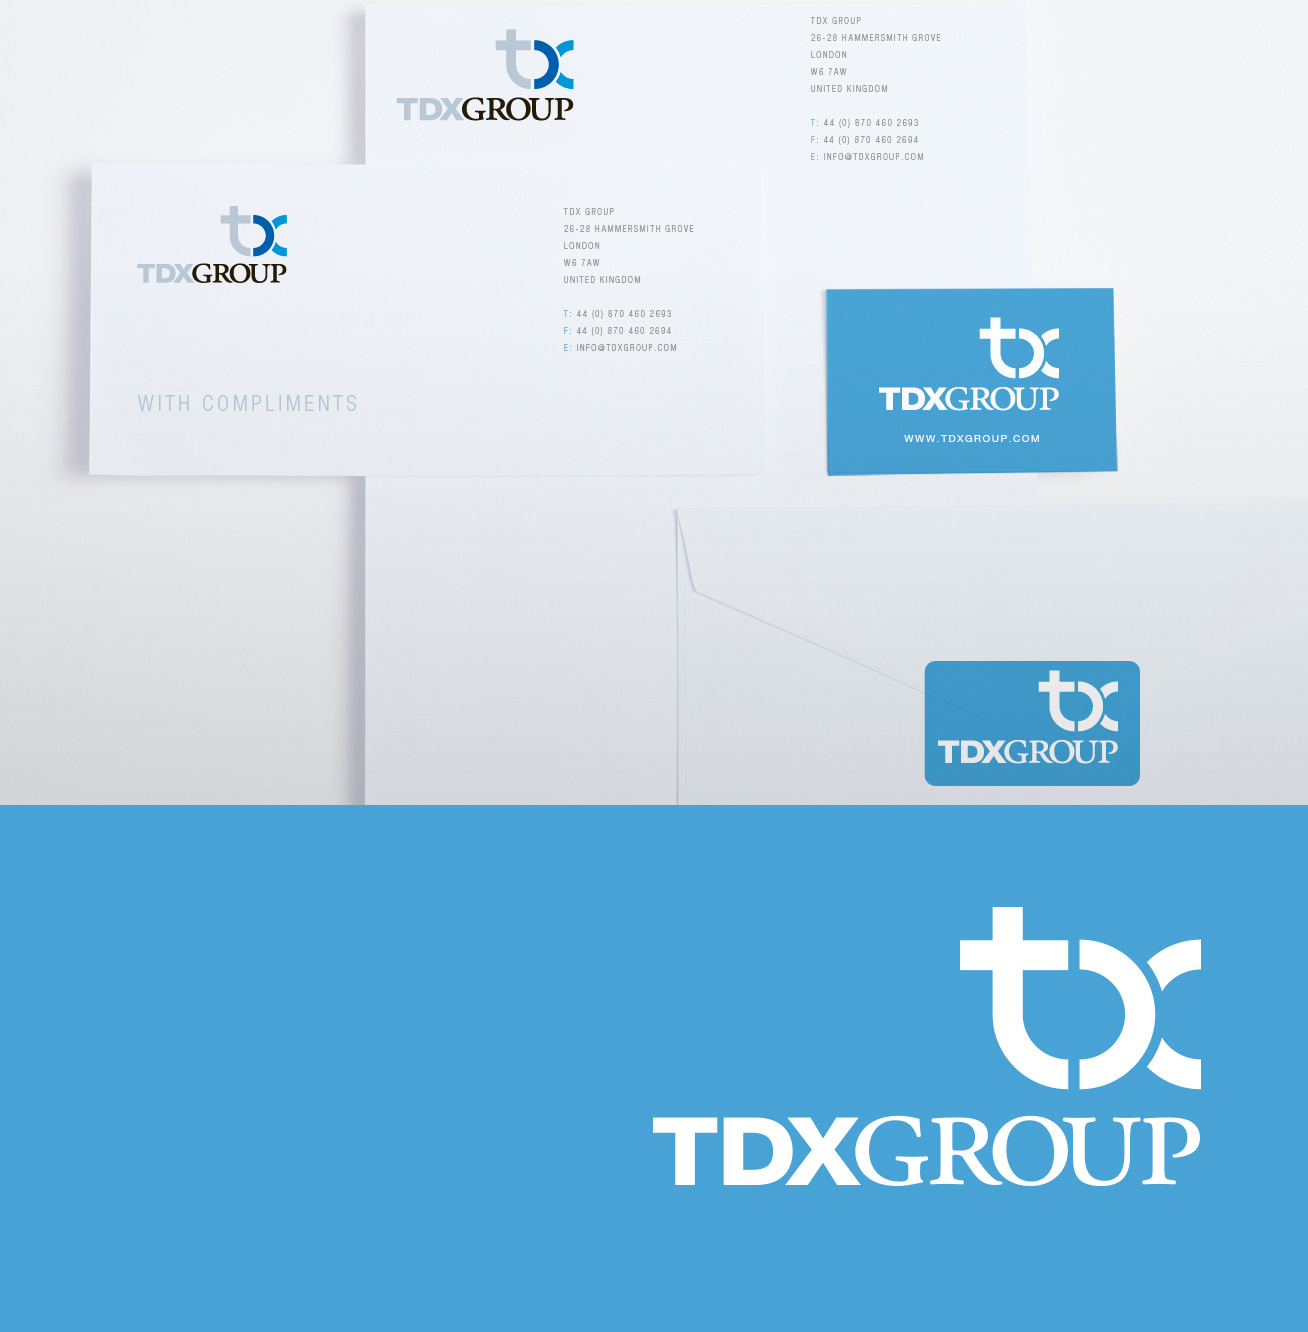 TDX Group - Corporate Identity Design